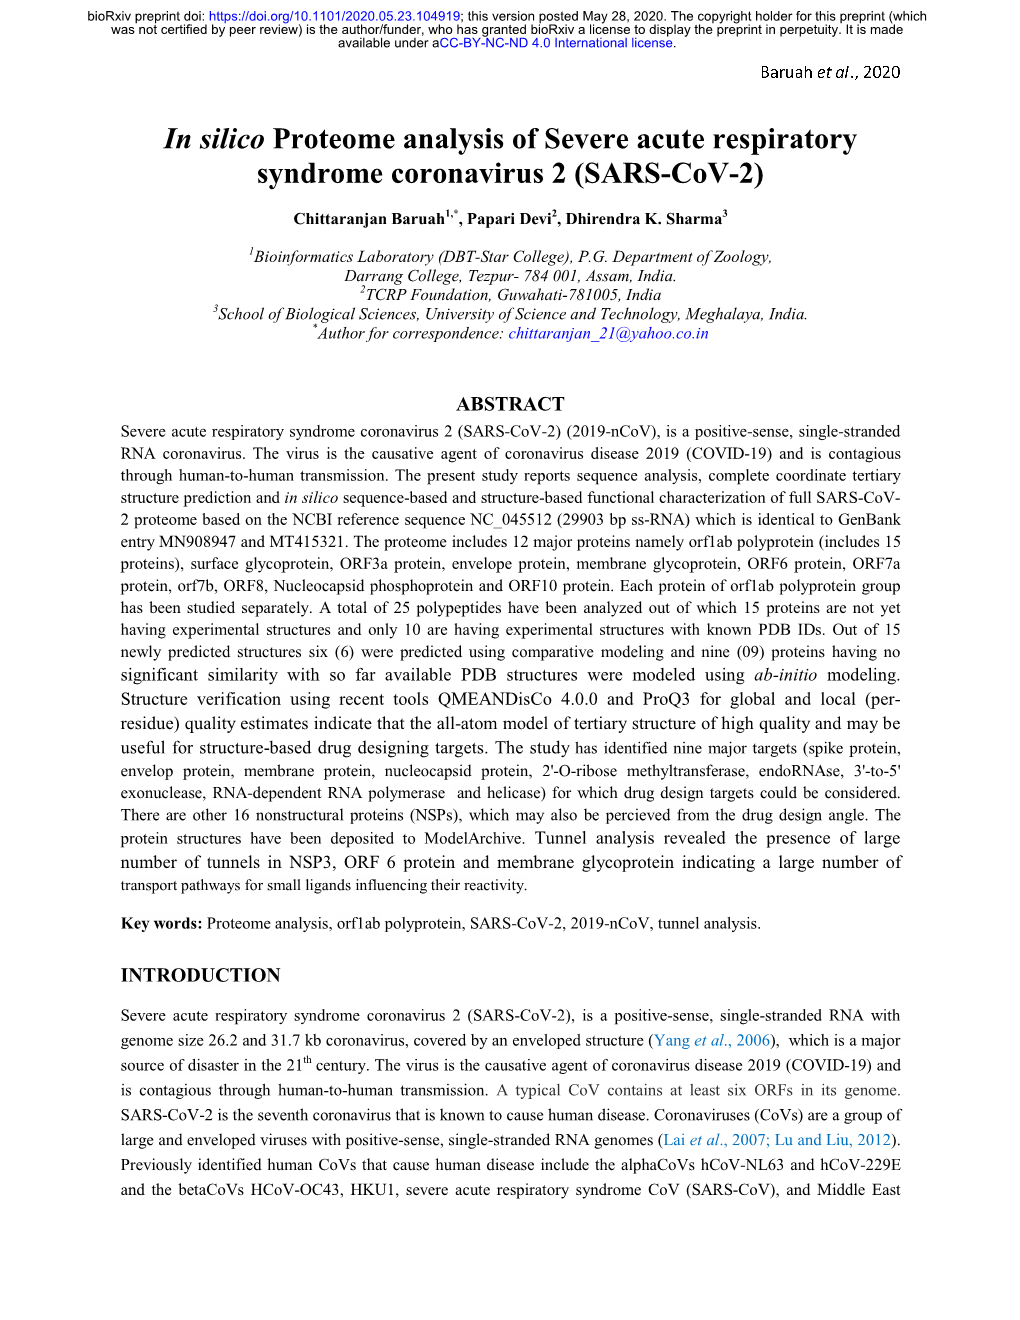 In Silico Proteome Analysis of Severe Acute Respiratory Syndrome Coronavirus 2 (SARS-Cov-2)